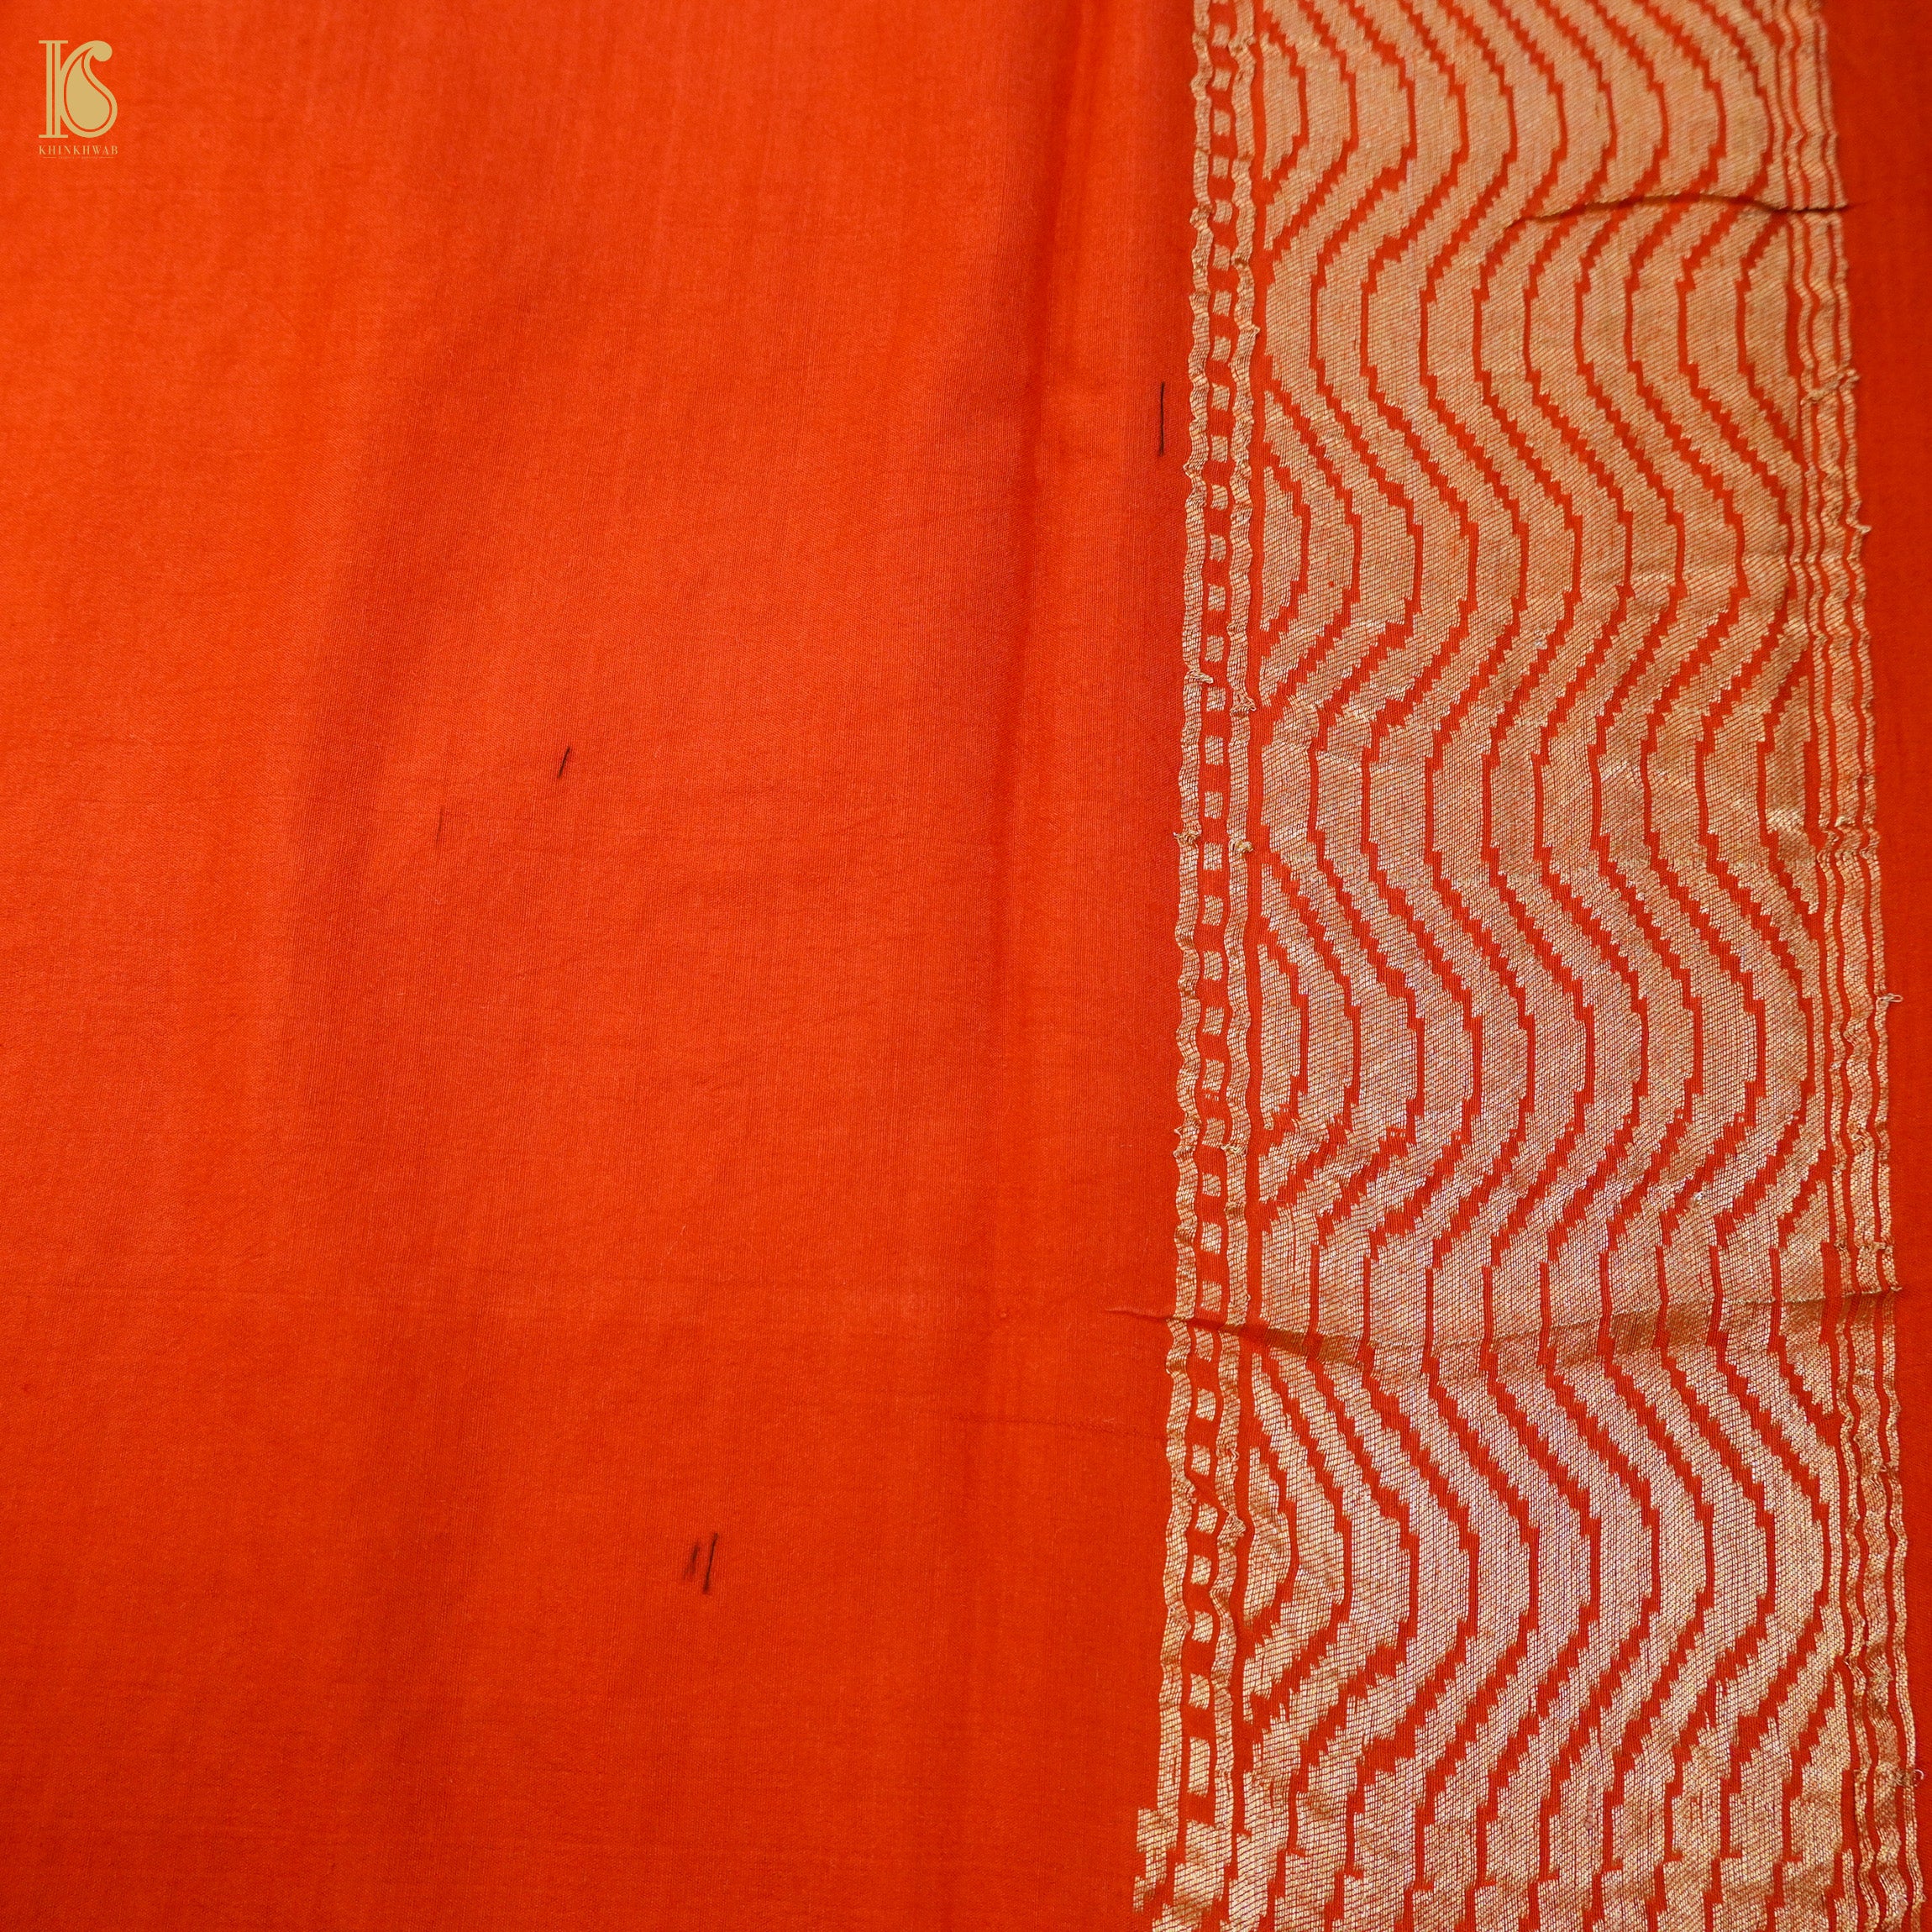 Multicolor Pure Moonga Silk Handloom Banarasi Gemoteric Saree - Khinkhwab